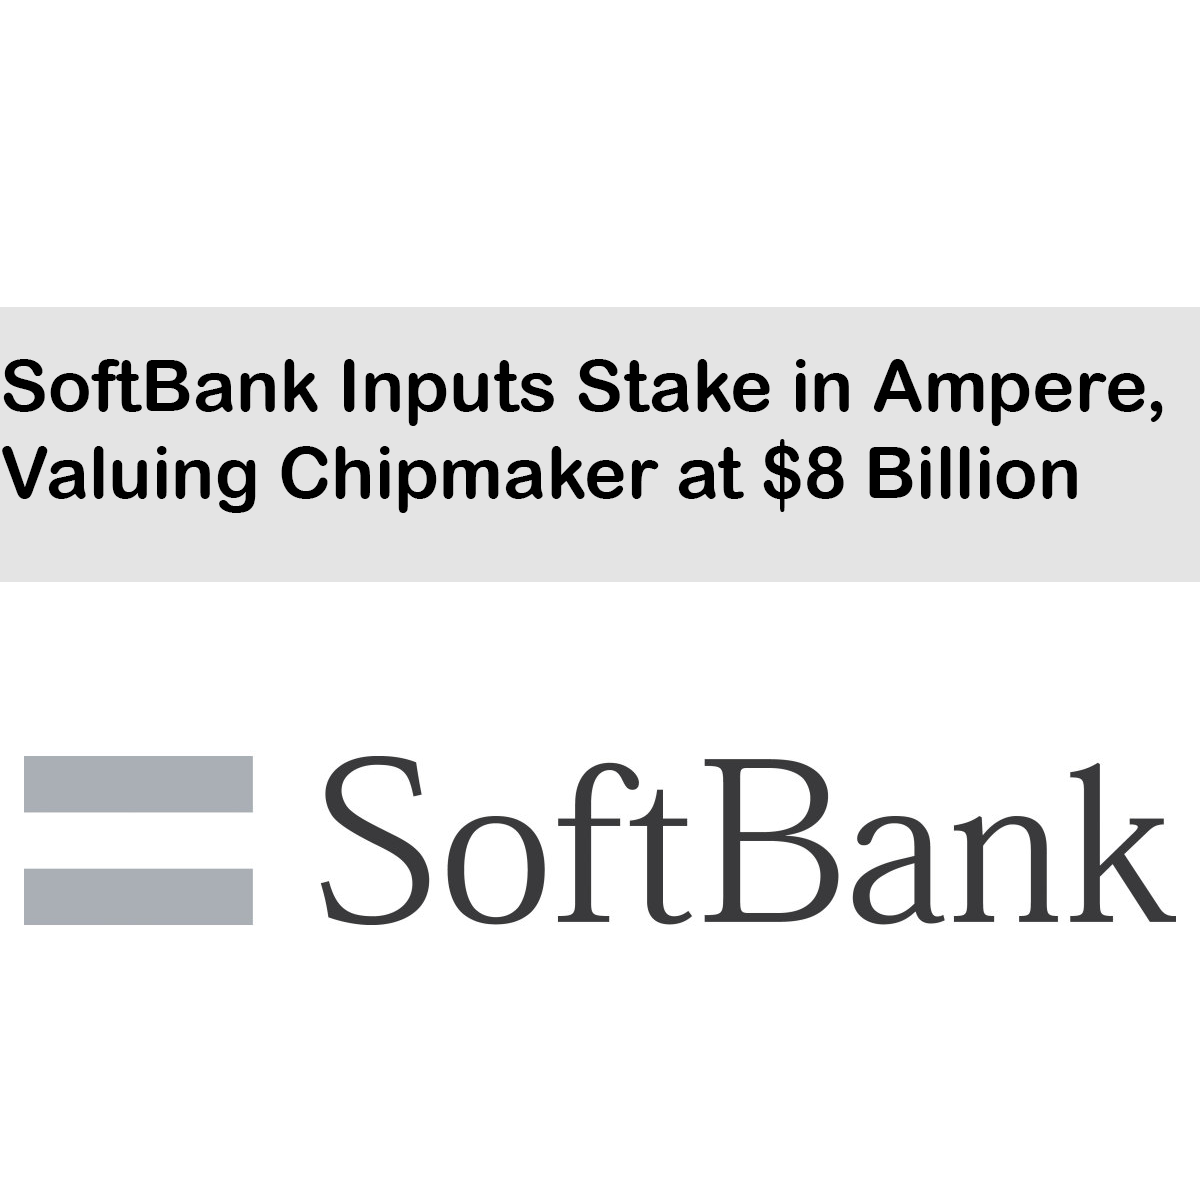 SoftBank Inputs Stake in Ampere, Valuing Chipmaker at $8 Billion